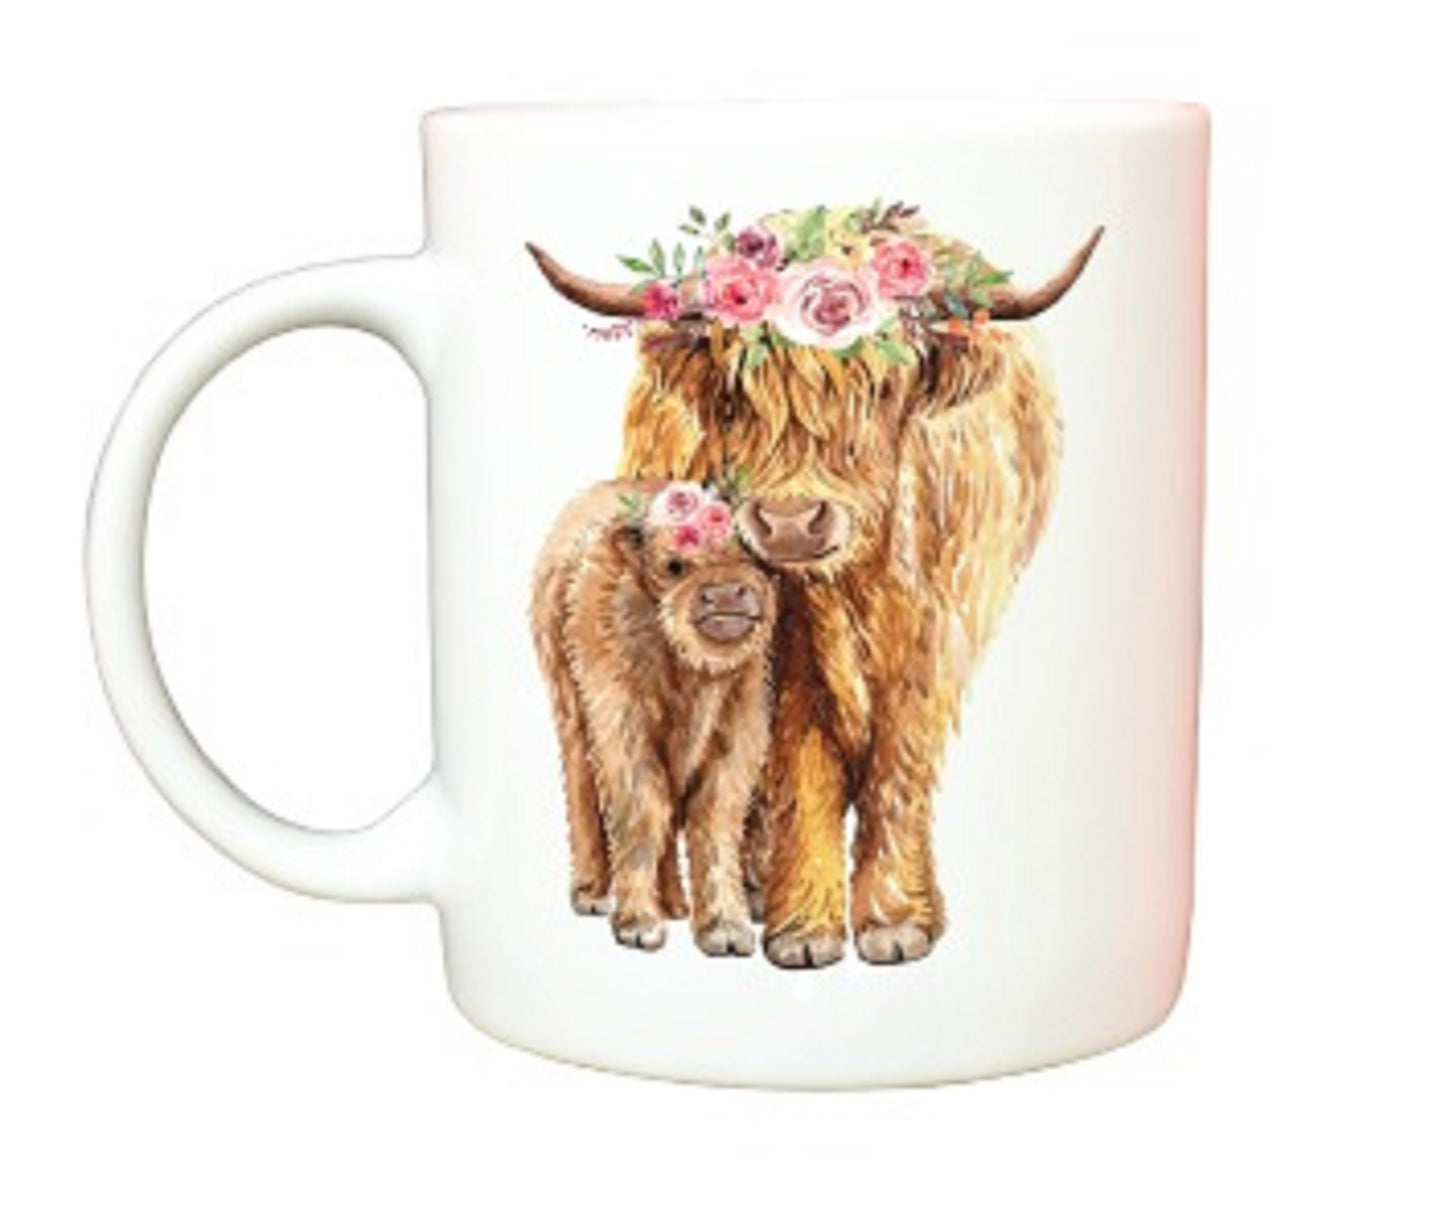  Highland Cow and Calf Coffee Mug by Free Spirit Accessories sold by Free Spirit Accessories